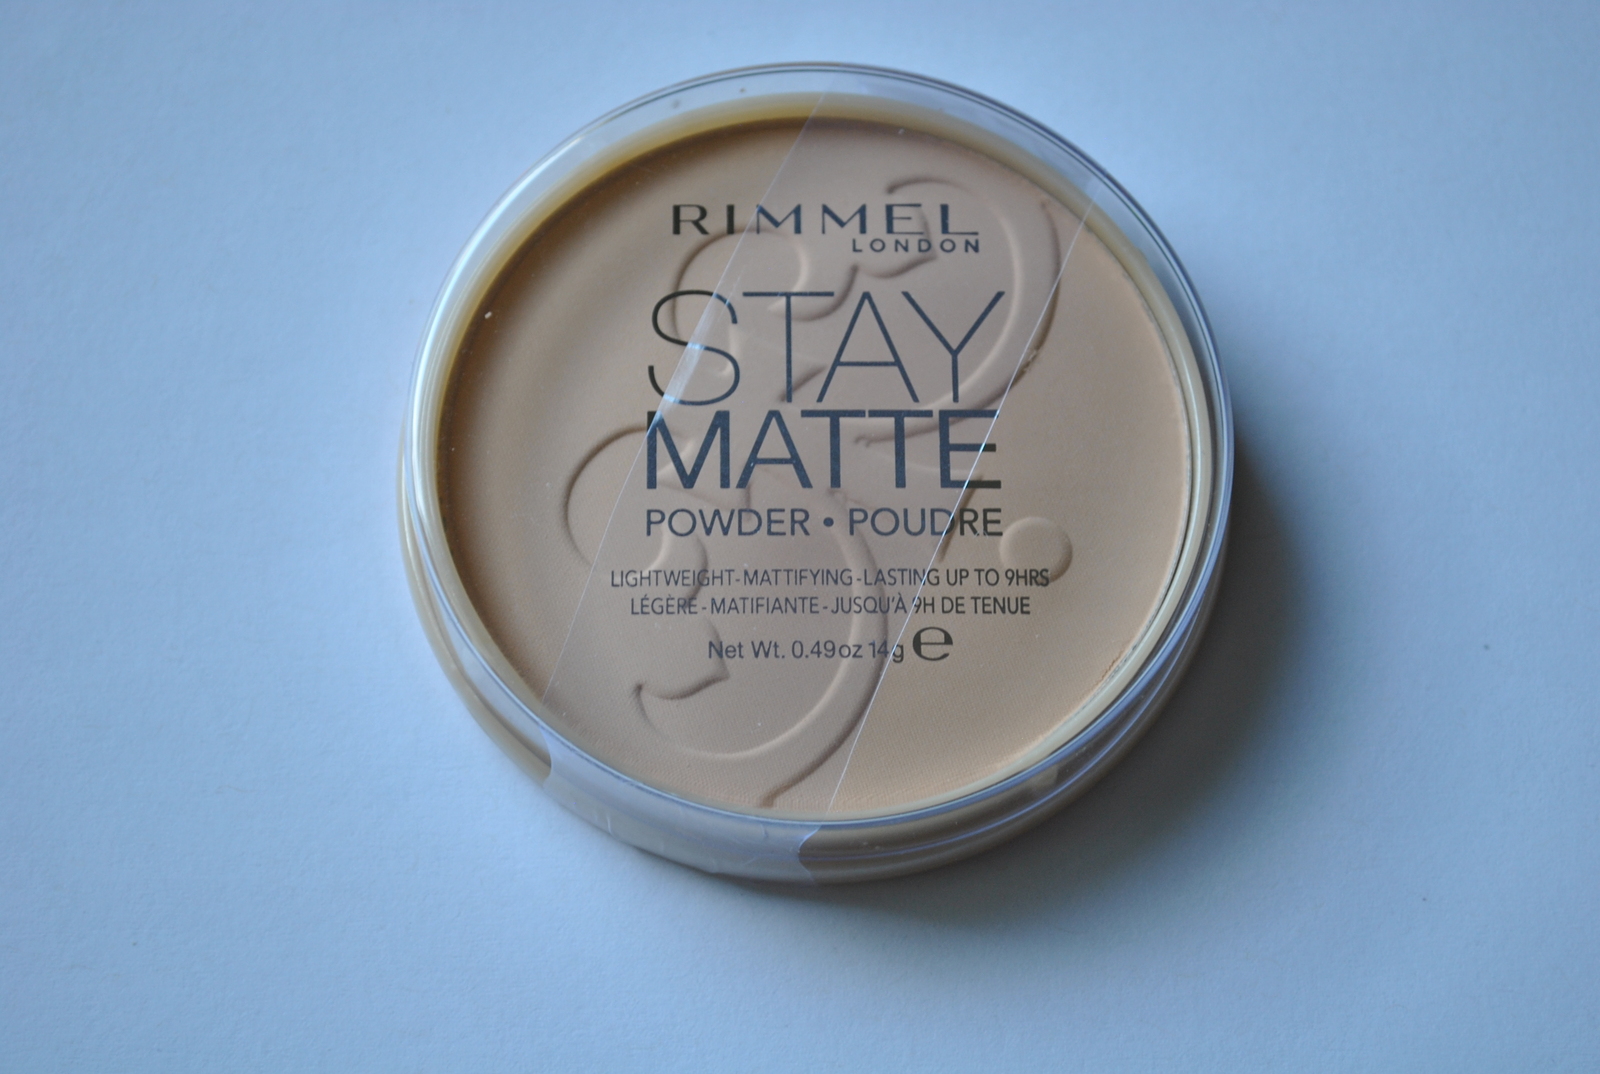 Rimmel Stay Matte Powder - #020 Nude Beige 0.49 oz (Pack of 1) - $14.99